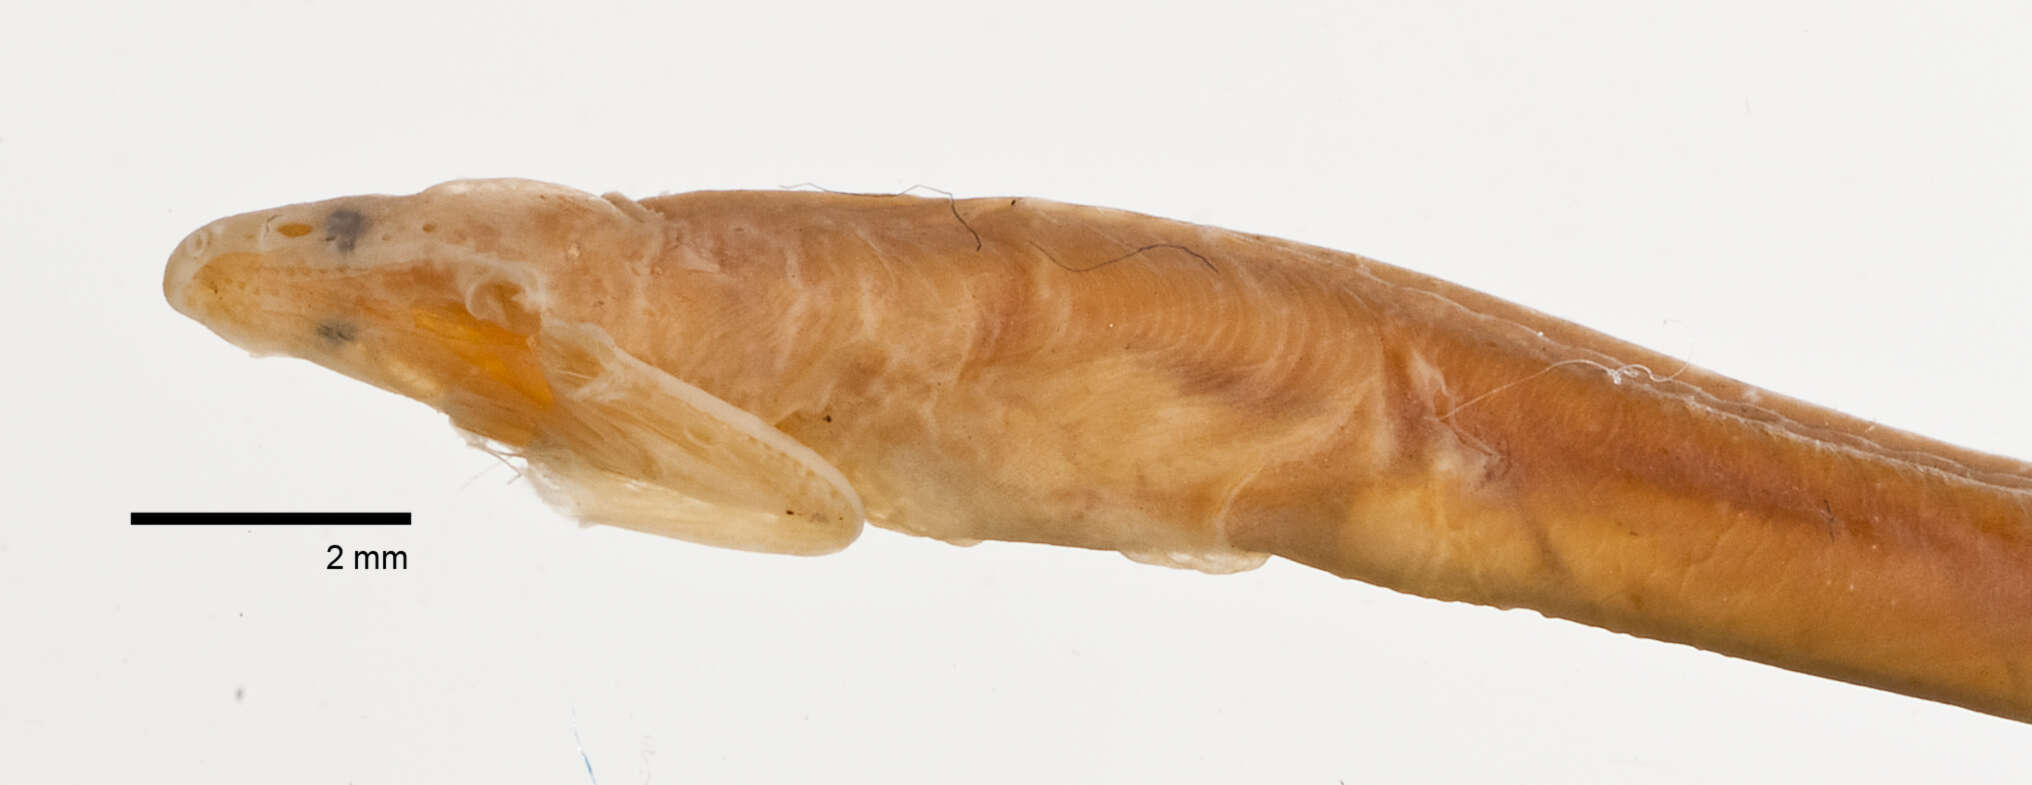 Image of Philippines worm eel